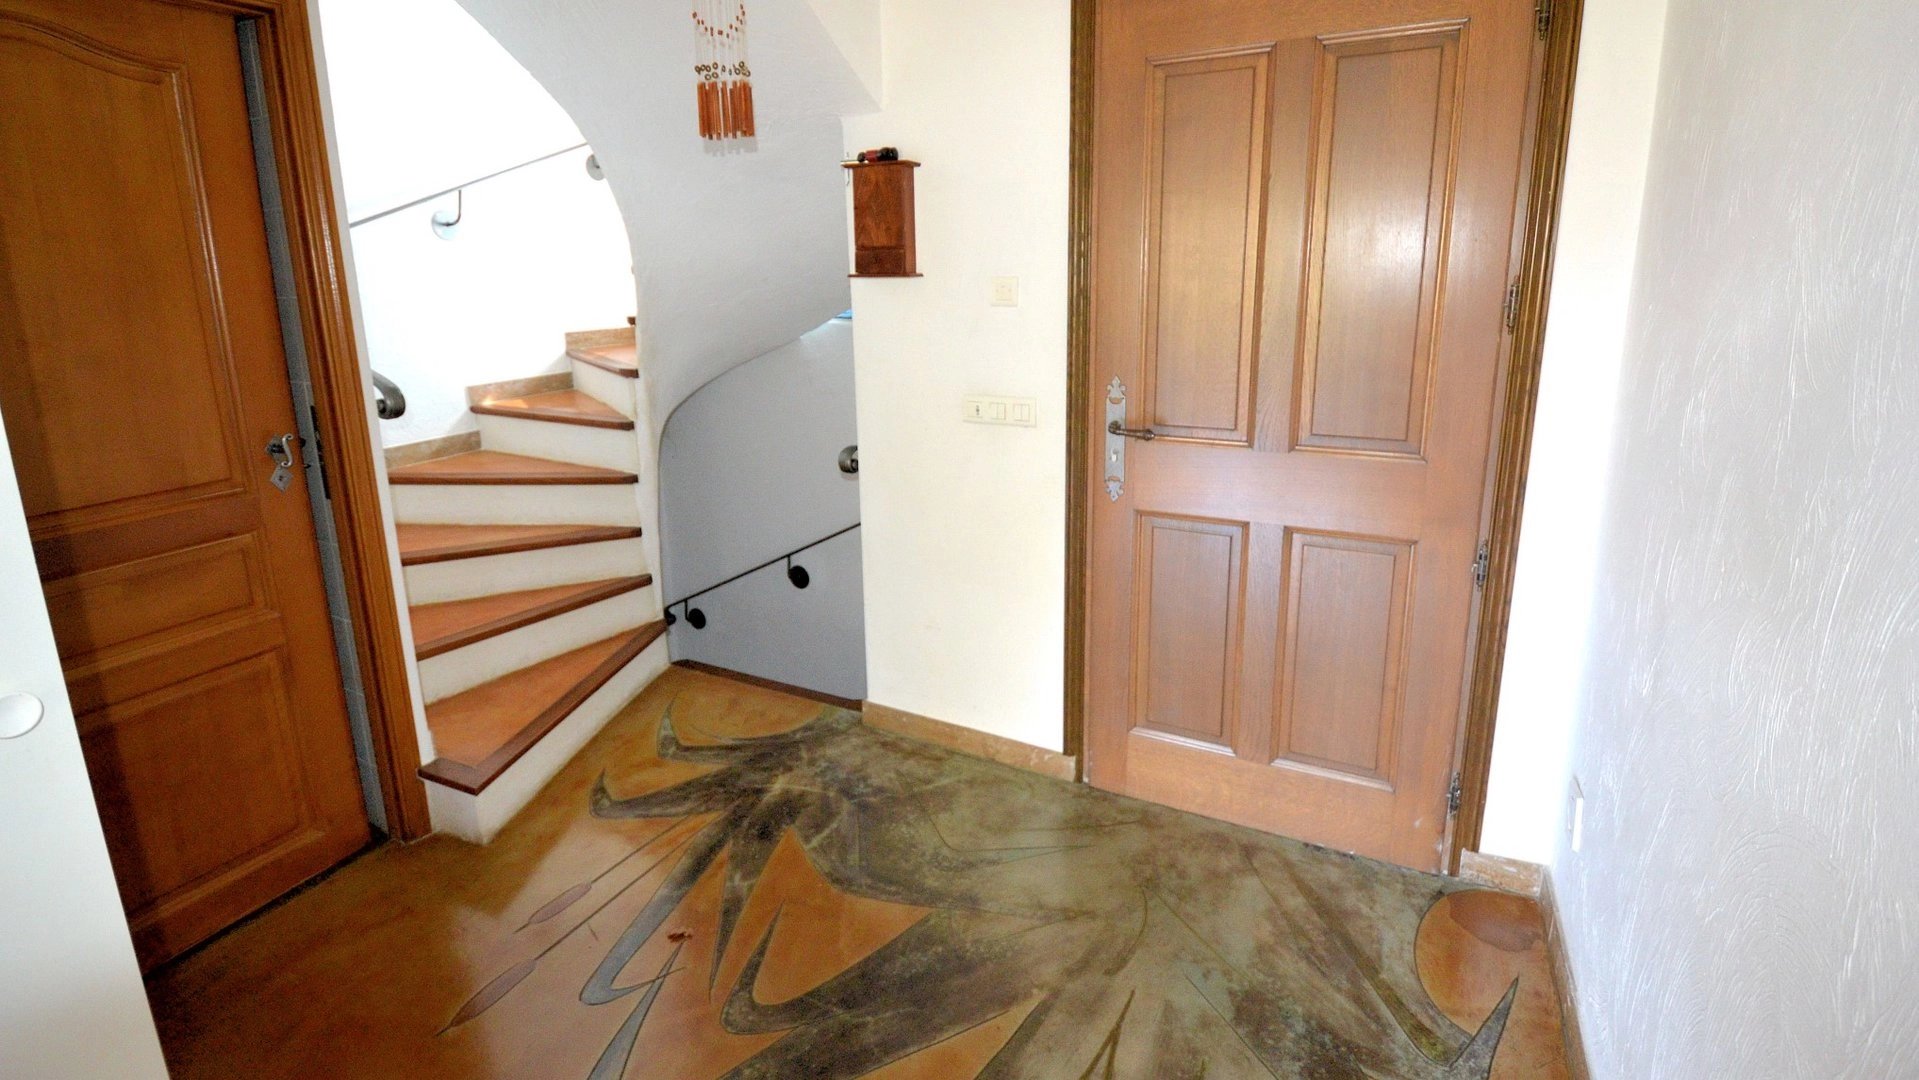 Entrance Wooden floor